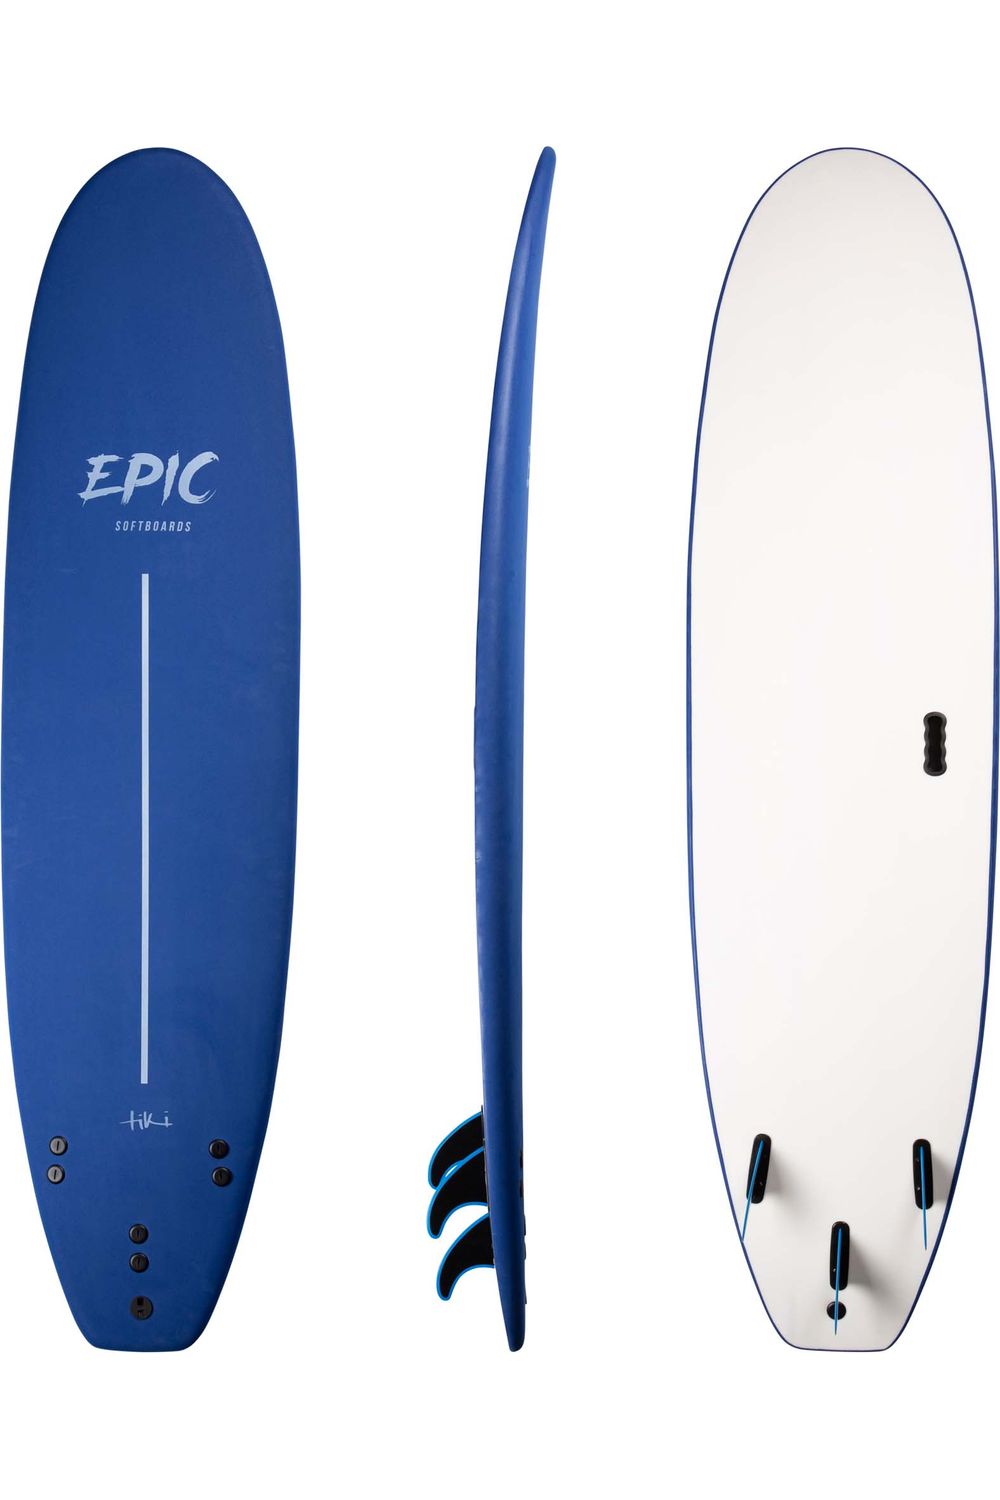 Tiki Epic 7'6 Softboard Blue